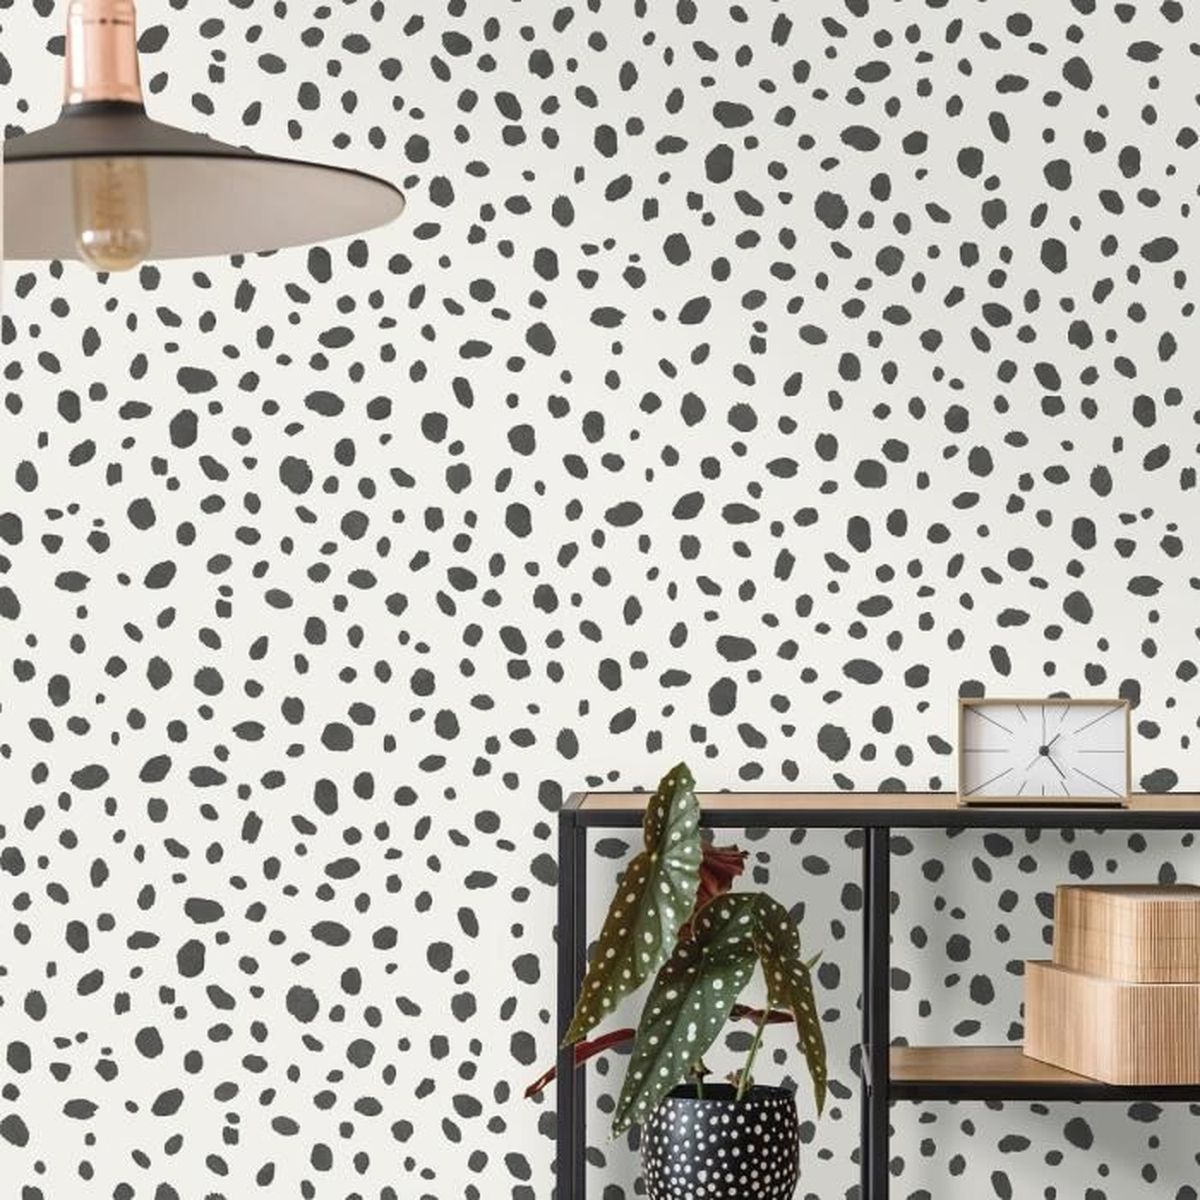 Arthouse Dalmatian Dots Papier Peint Imprimé Animal Taches Polkadot Noir Blanc 908509 